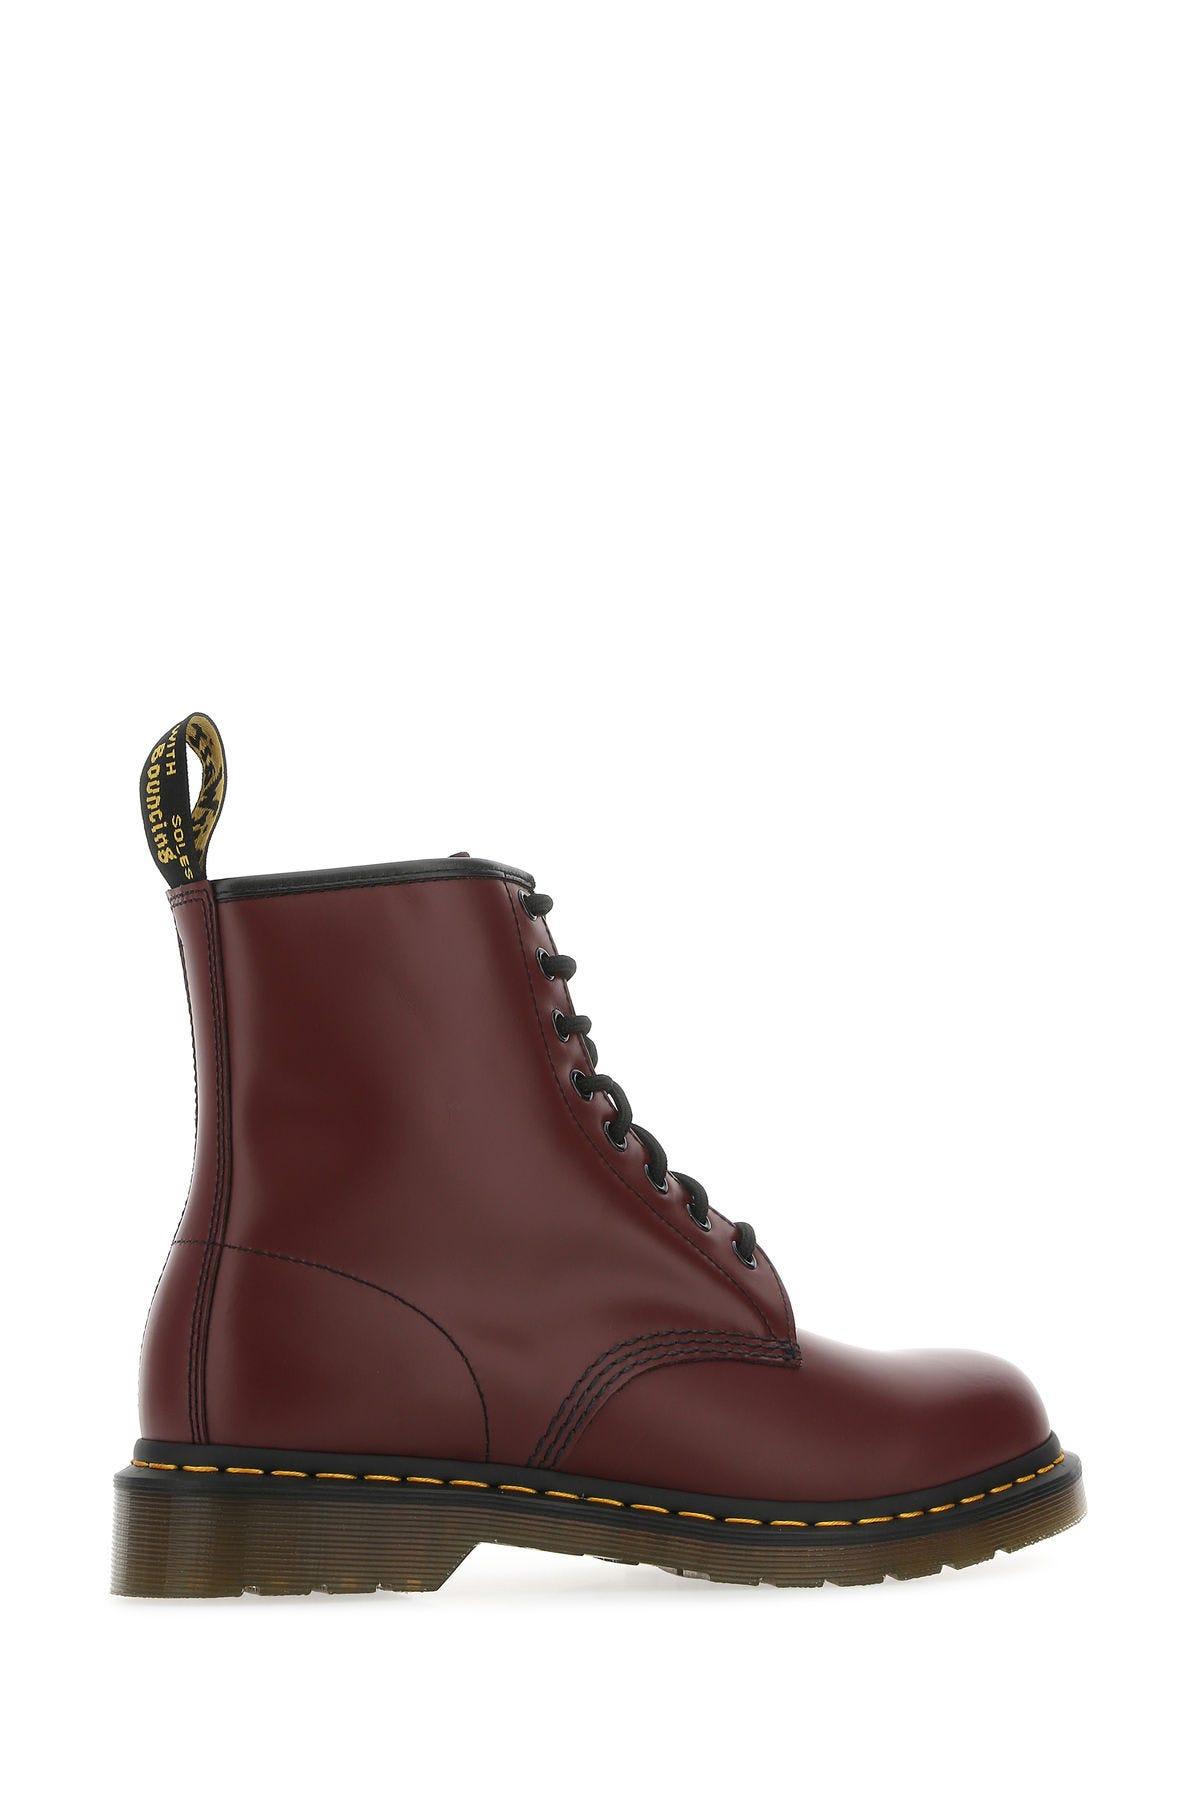 Shop Dr. Martens' Burgundy Leather 1460 Ankle Boots